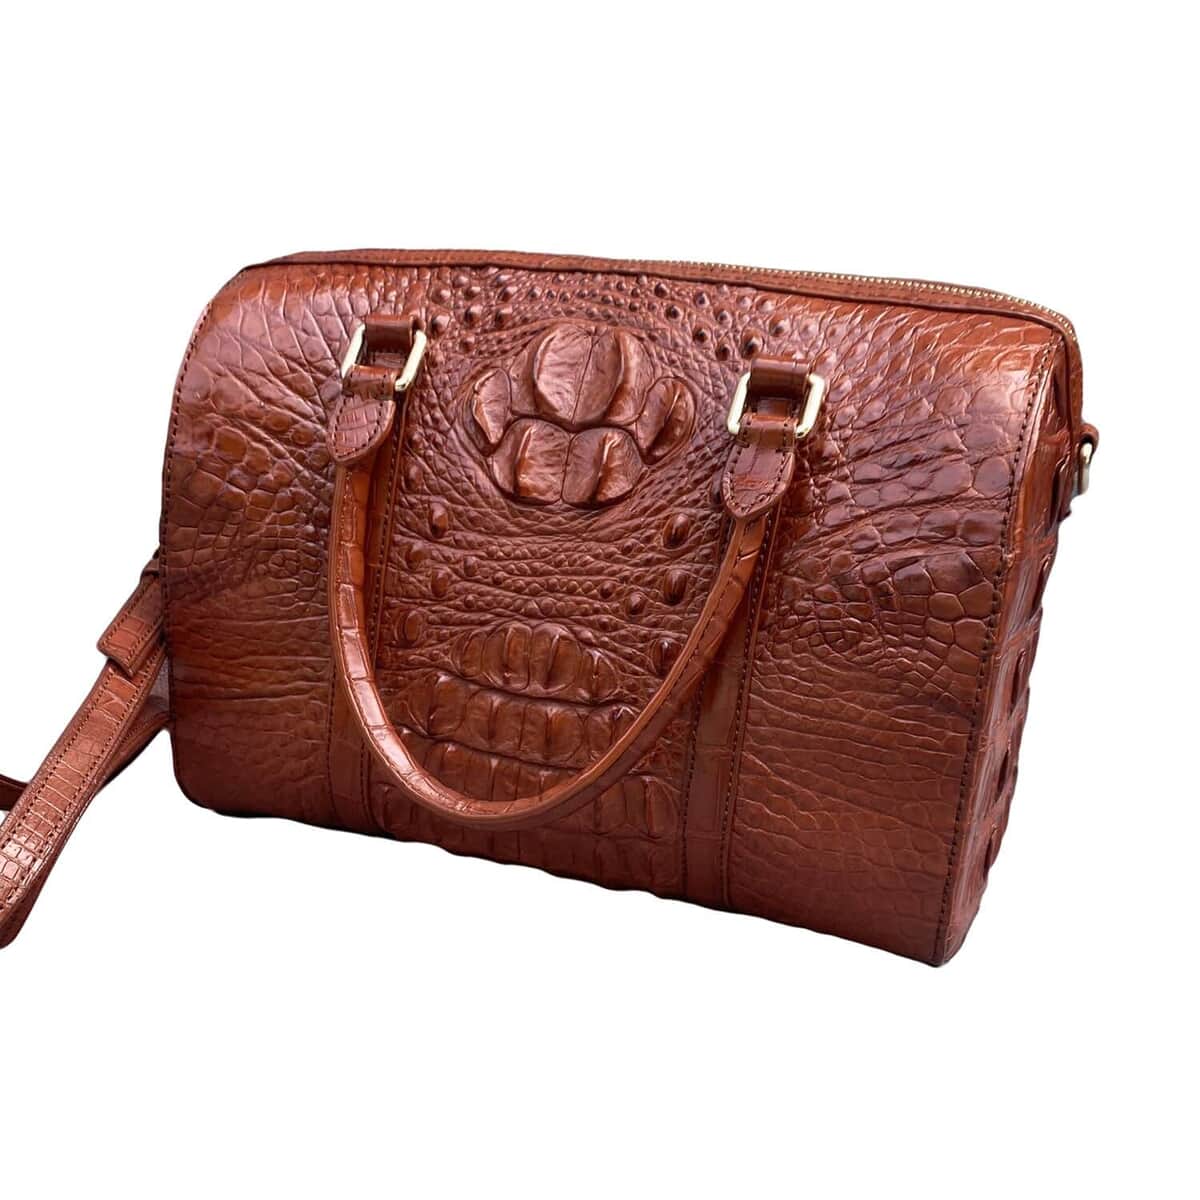 Genuine Crocodile Skin Leather Women's Handbag Alligator Satchel Bag Rose Red